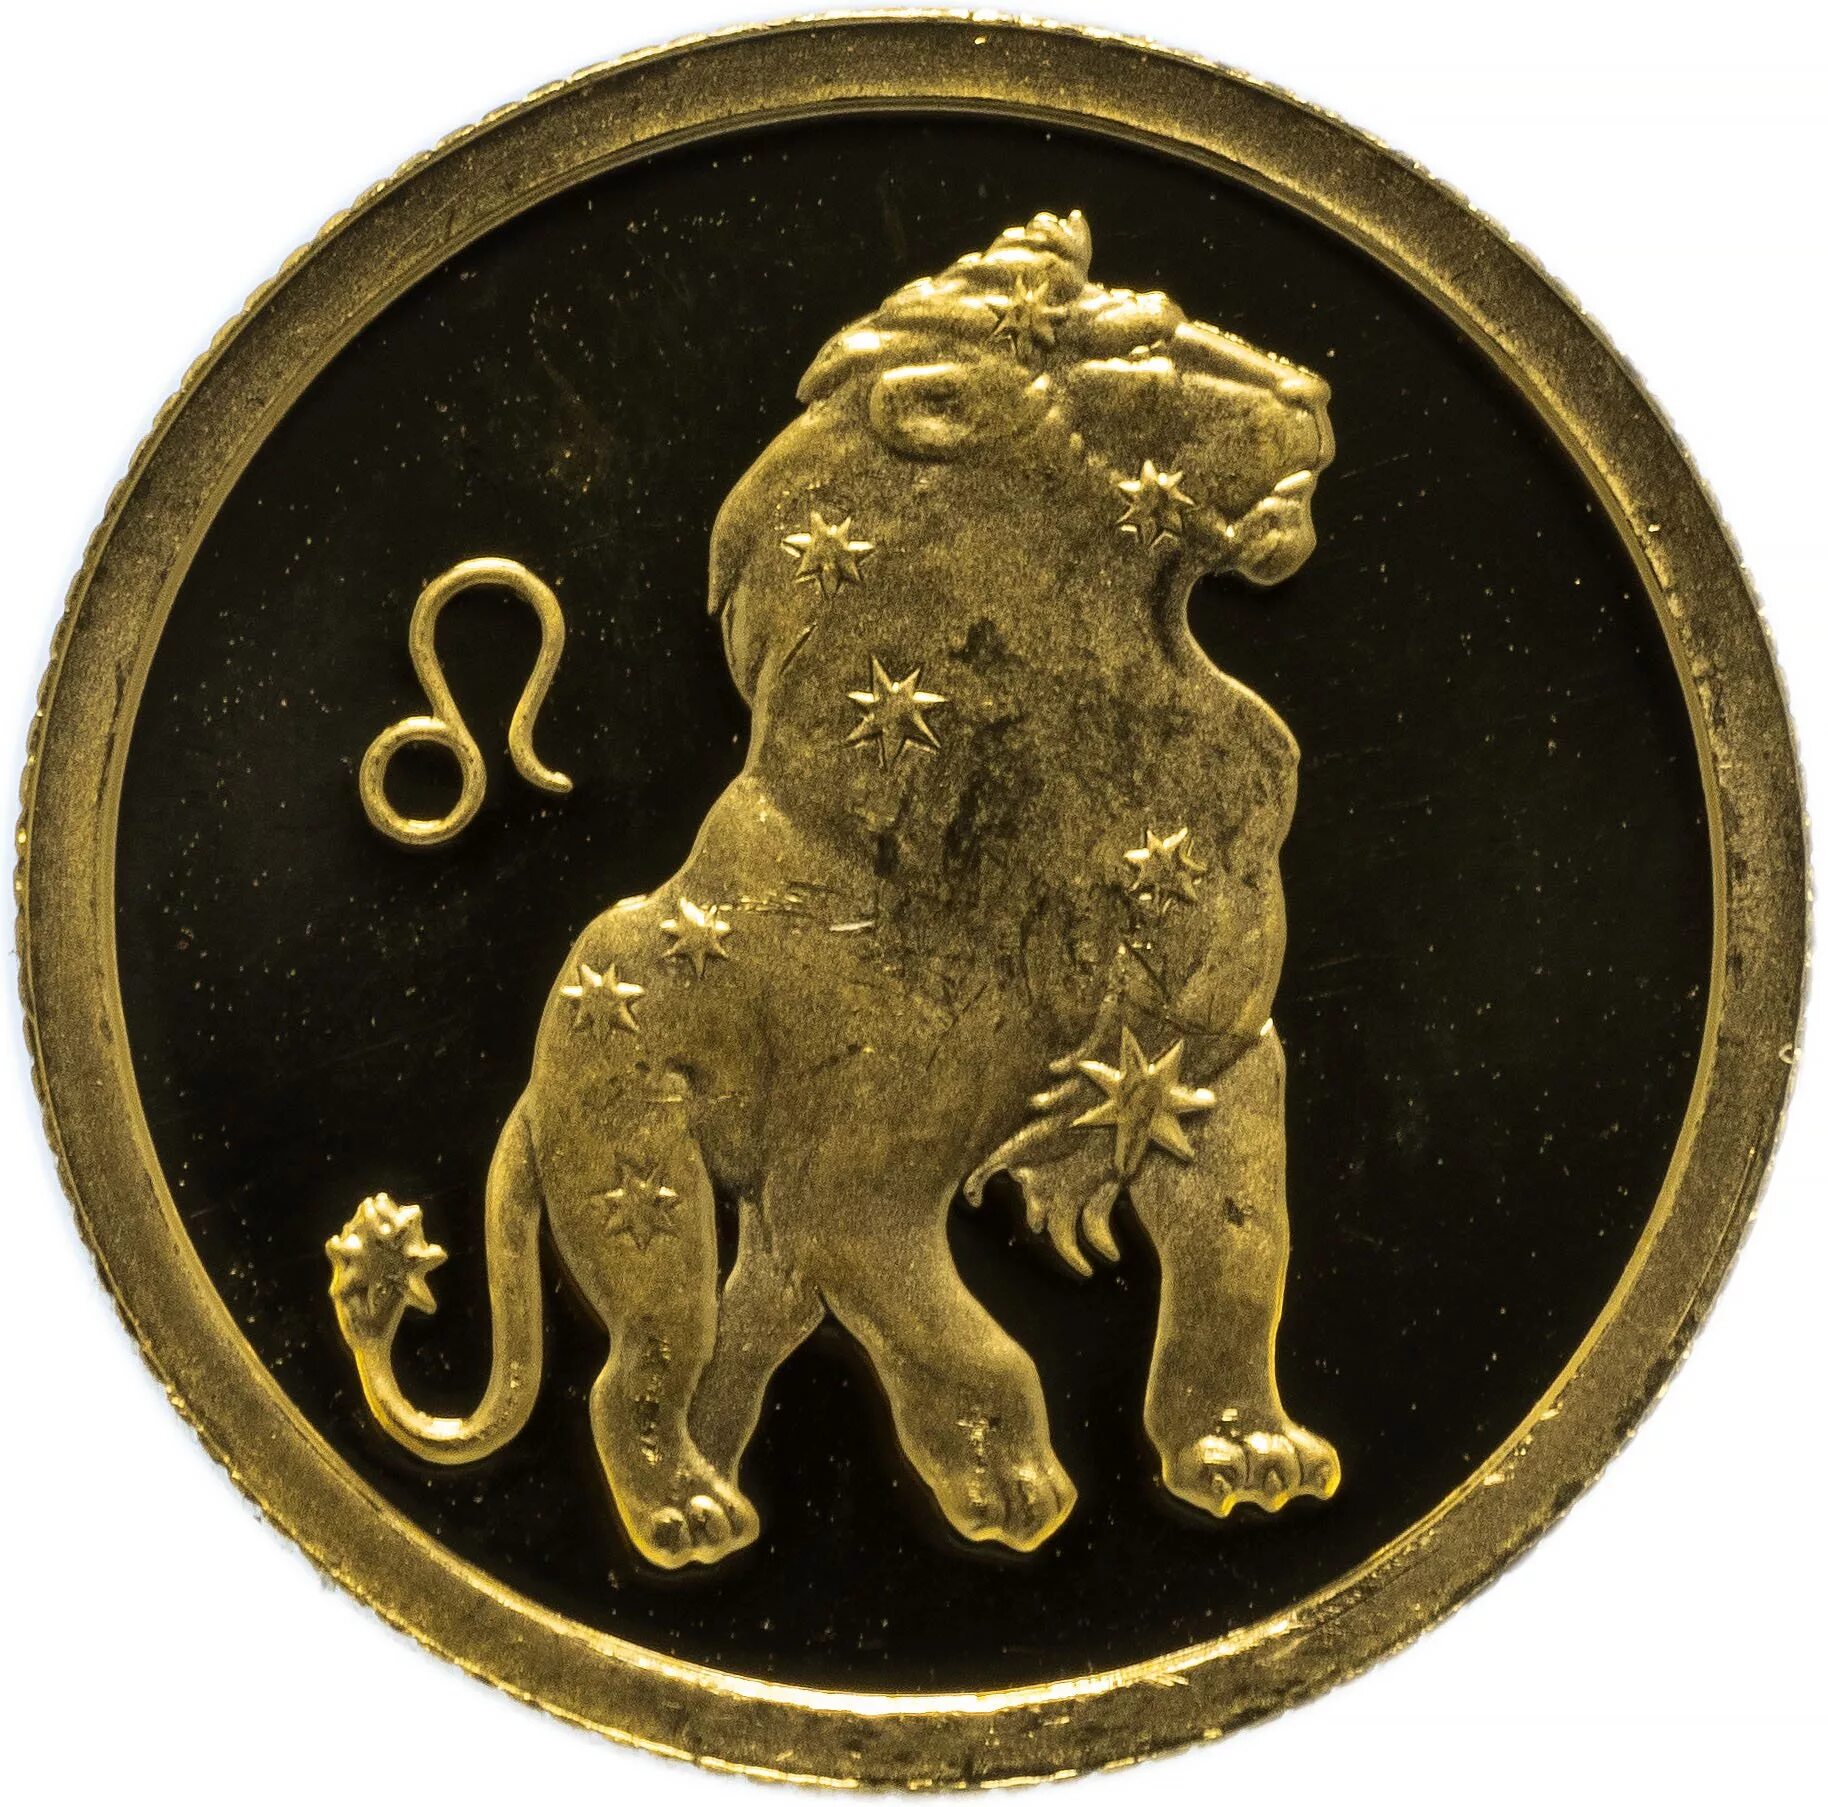 Монета знак зодиака Лев. Золотая монета Лев знак зодиака. Монета со знаком зодиака. Монеты знаки зодиака золото. Золотой зодиак